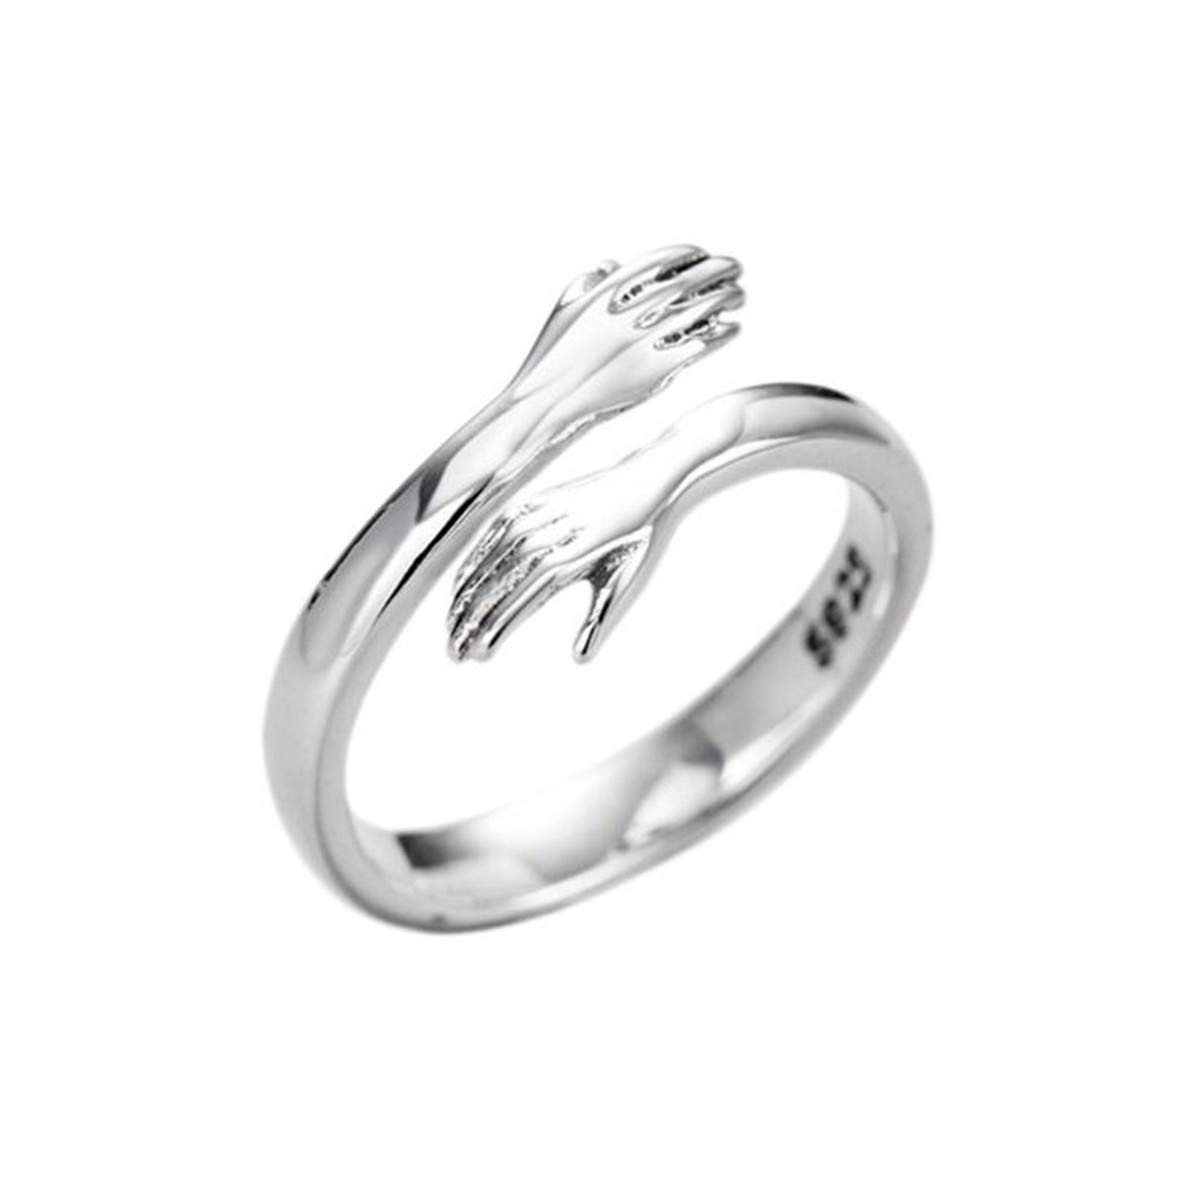 Qordelia 925 Pure Silver Rings Hugging Hands Open Ring Jewelry for Women Girls, Adjustable